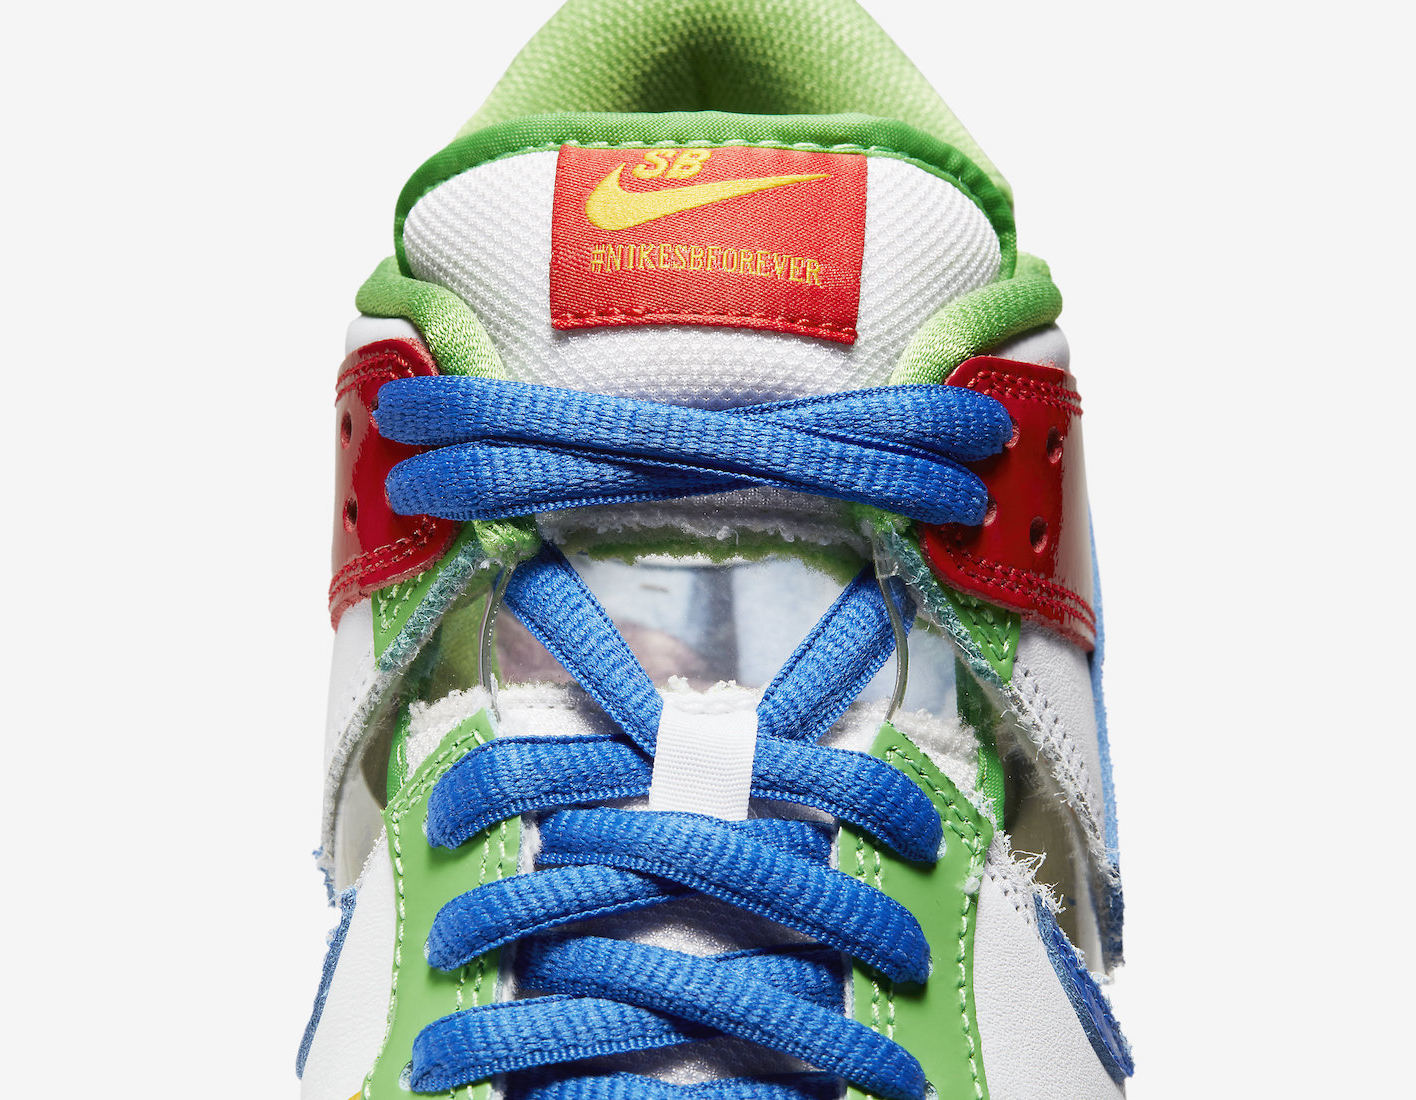 Nike SB Dunk Low 'Ebay Sandy Bodecker'